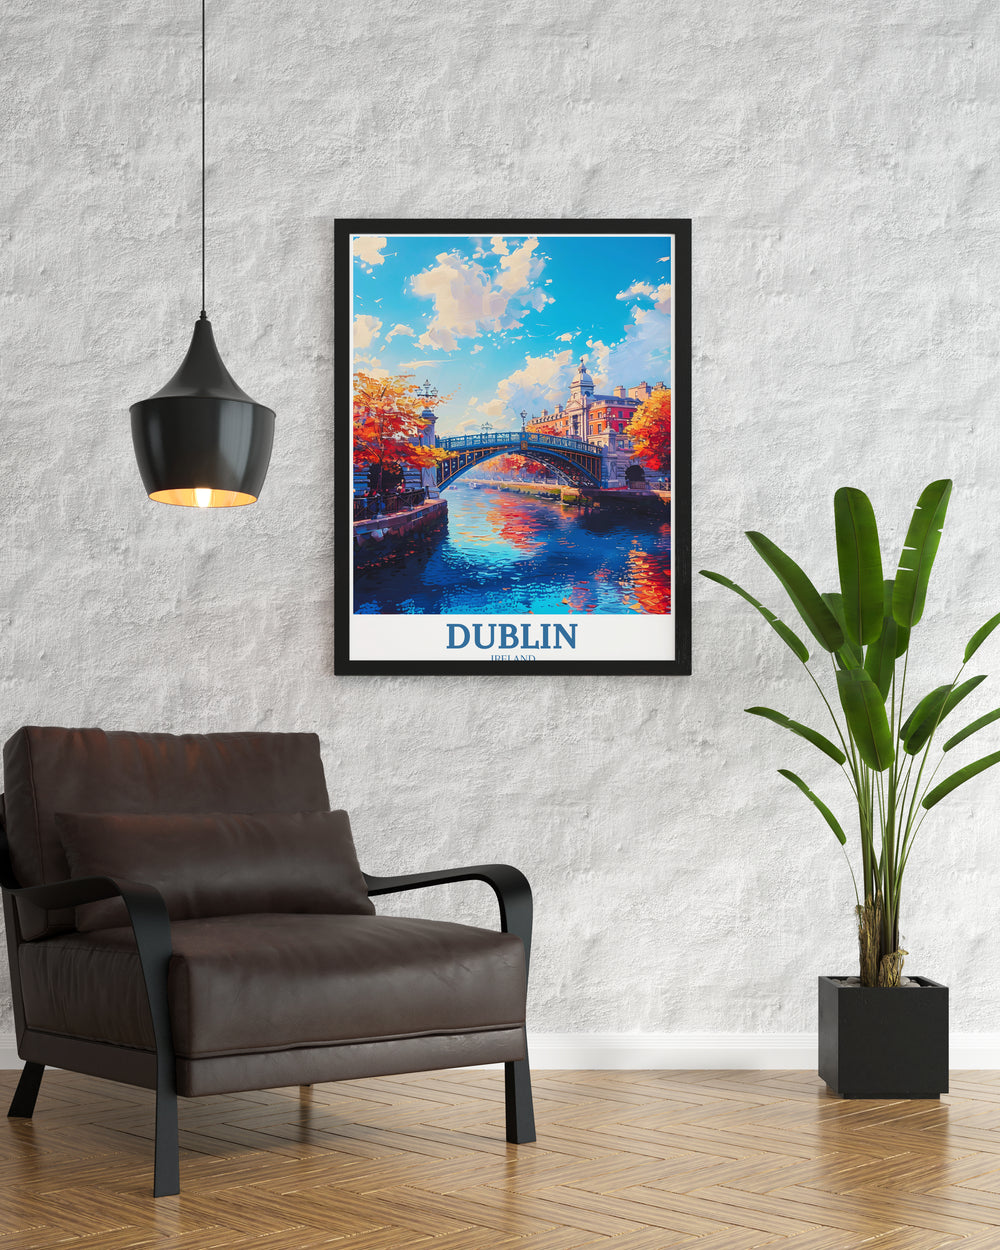 Dublin Ha'penny Bridge Poster: Capture Ireland's Charm in Your Home Décor